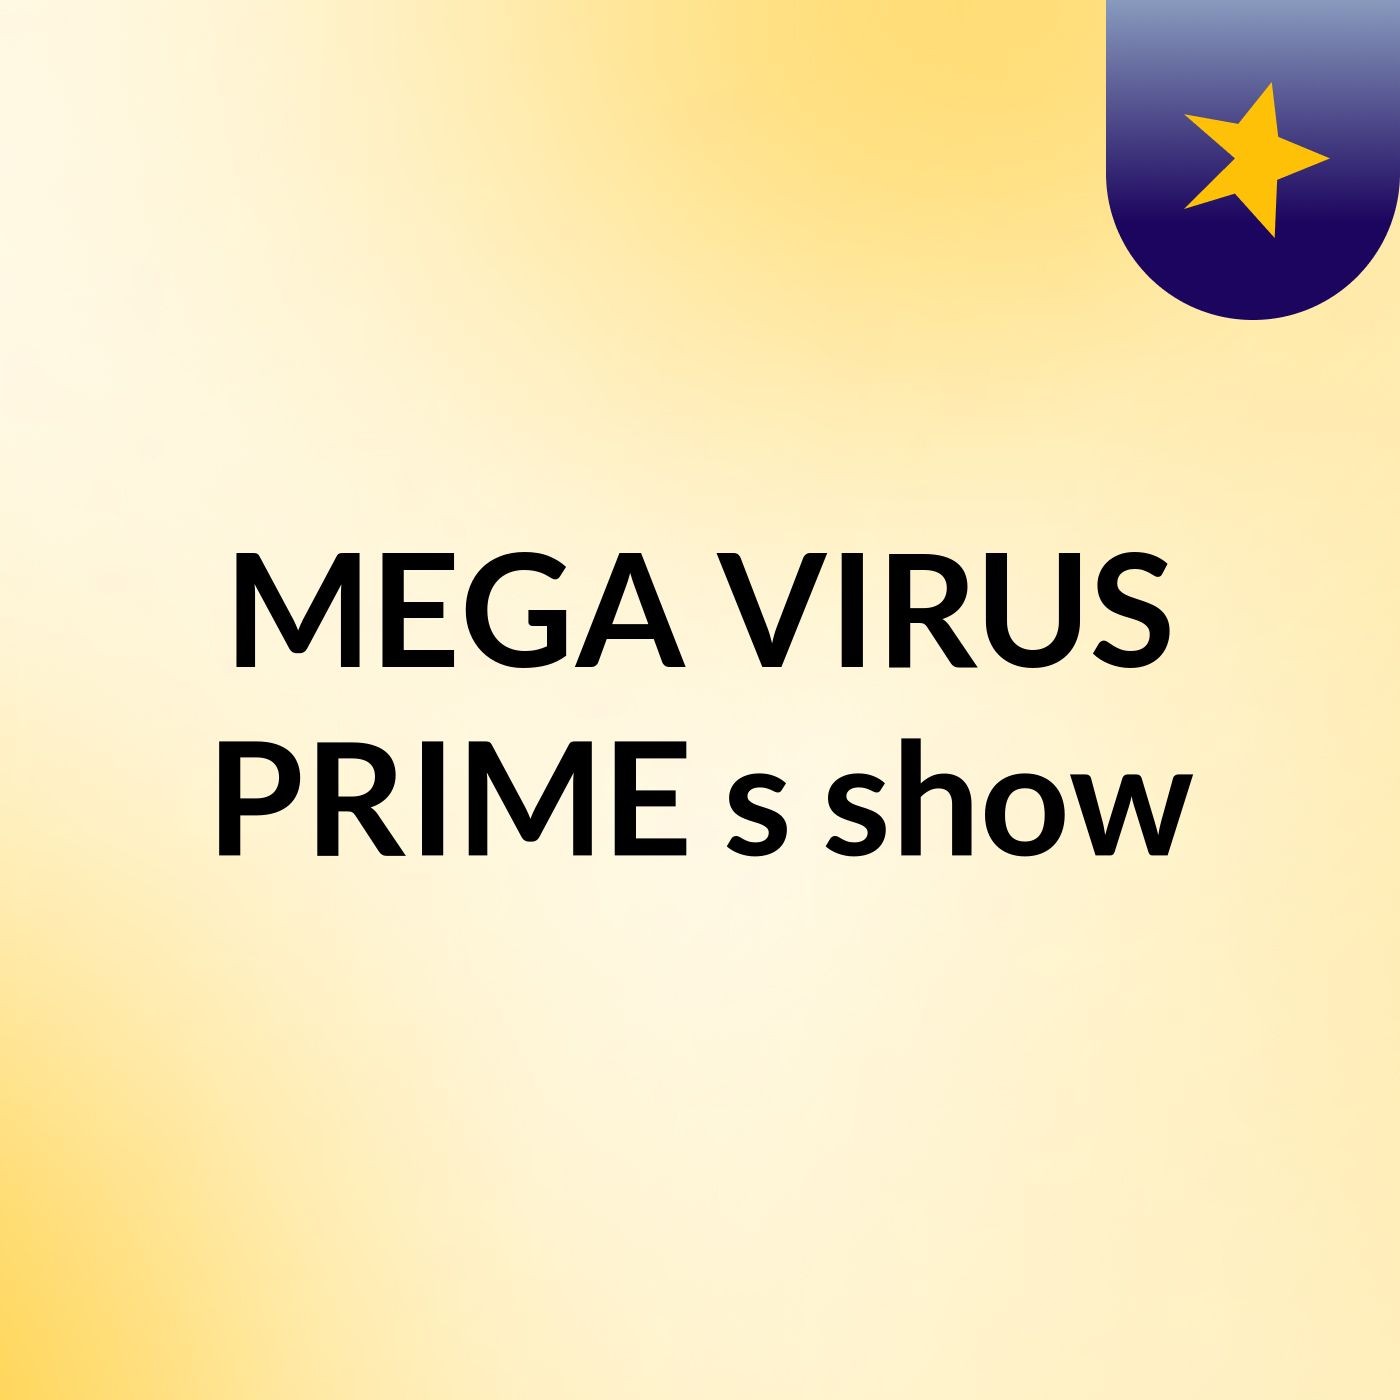 MEGA VIRUS PRIME's show